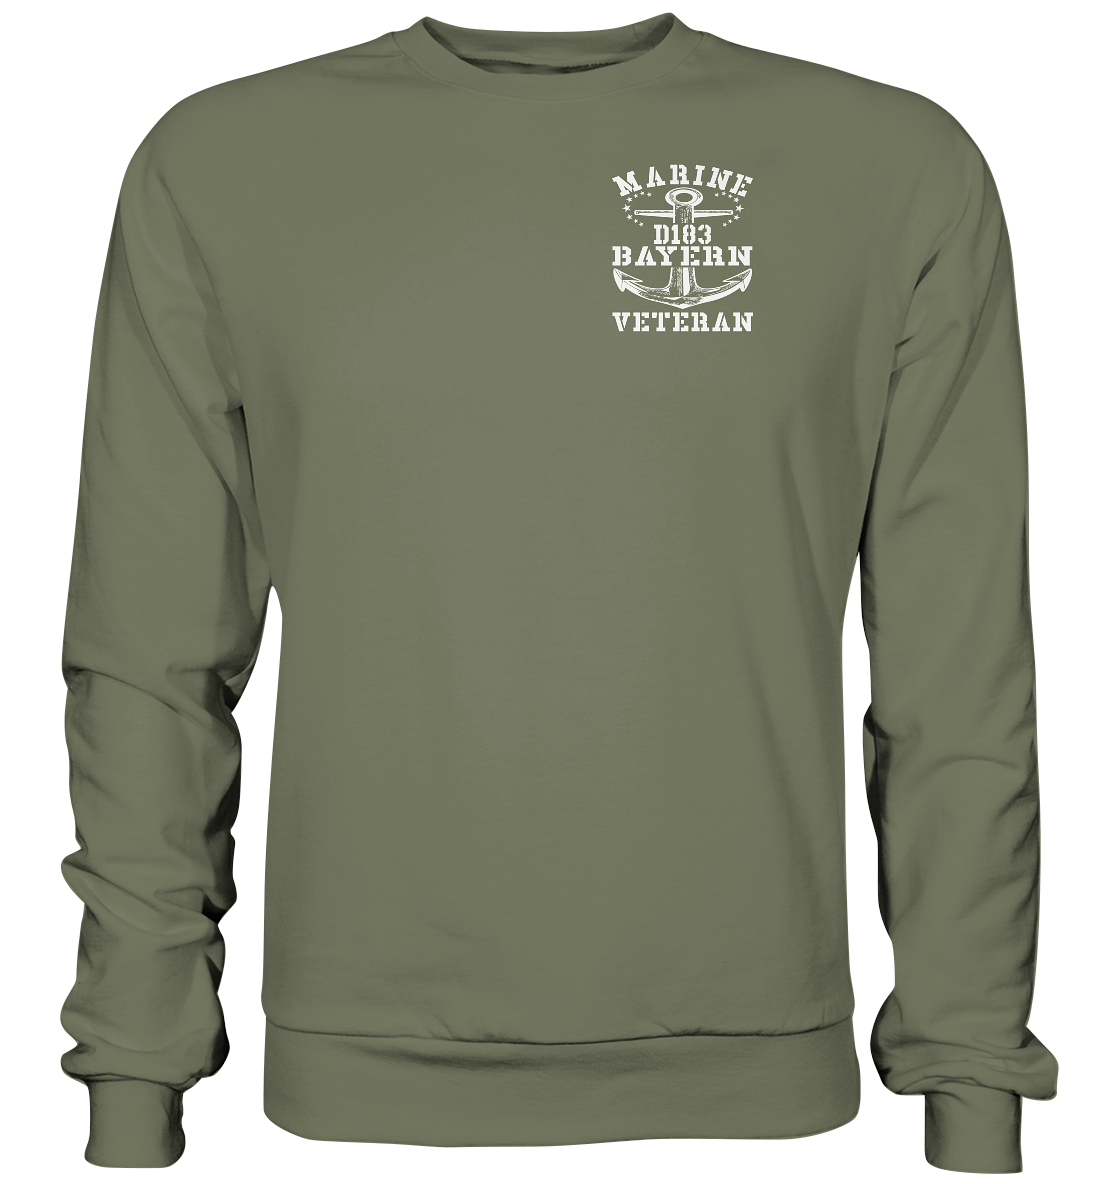 D183 Zerstörer BAYERN Marine Veteran Brustlogo - Premium Sweatshirt